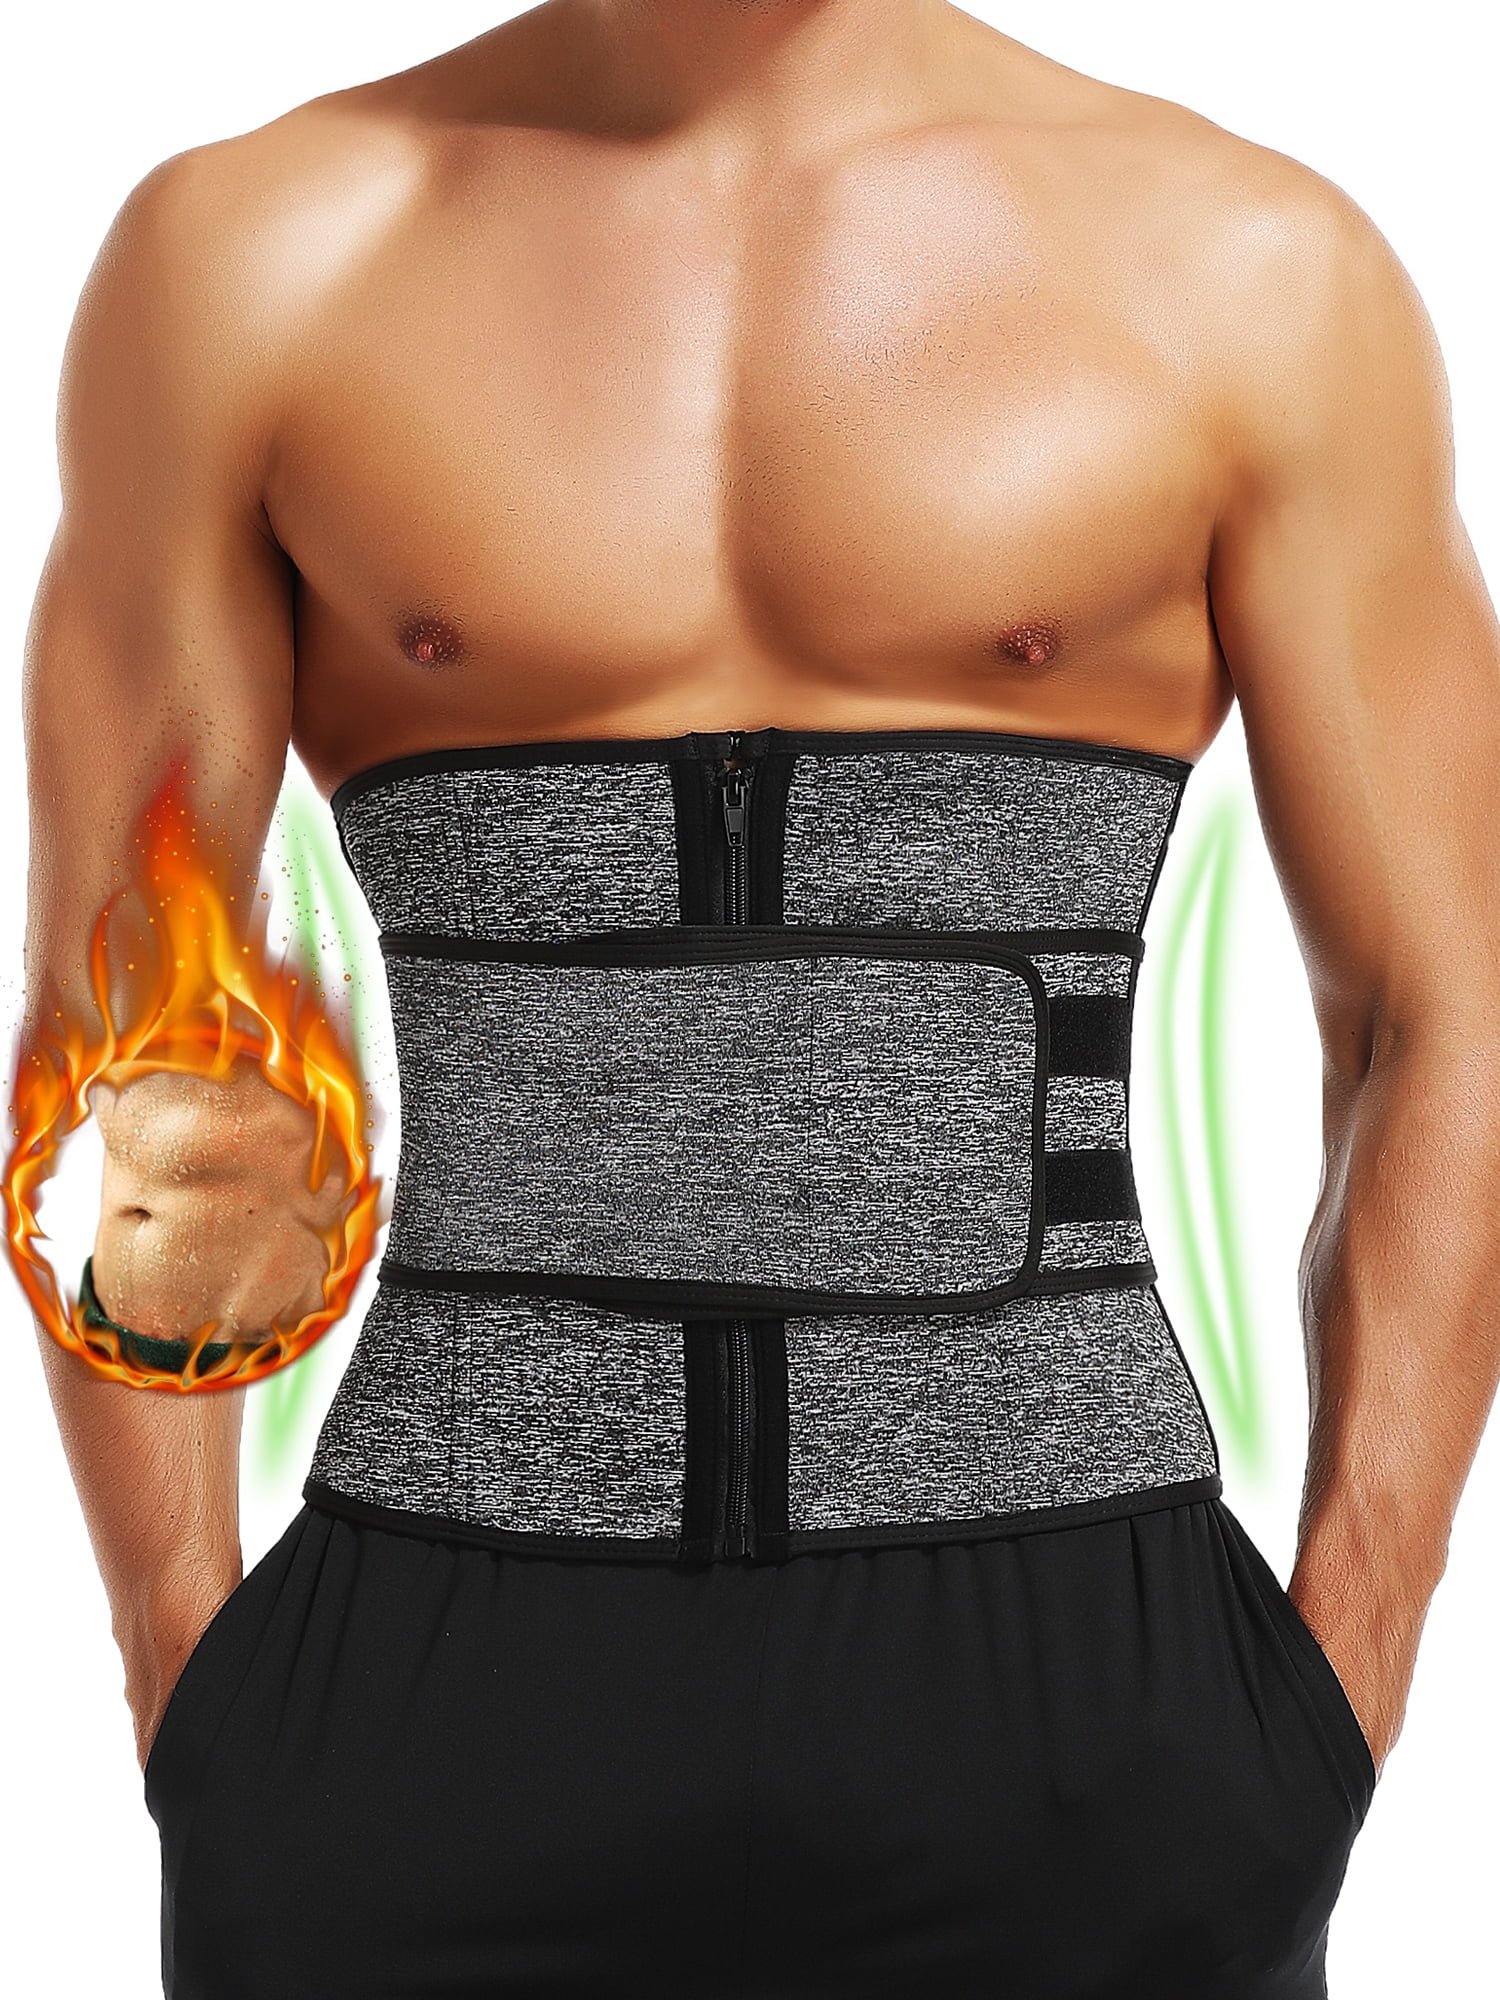 Men Women Abdomen Fat Burner Belly Compression Body Shaper Waist Trainer Belt US 